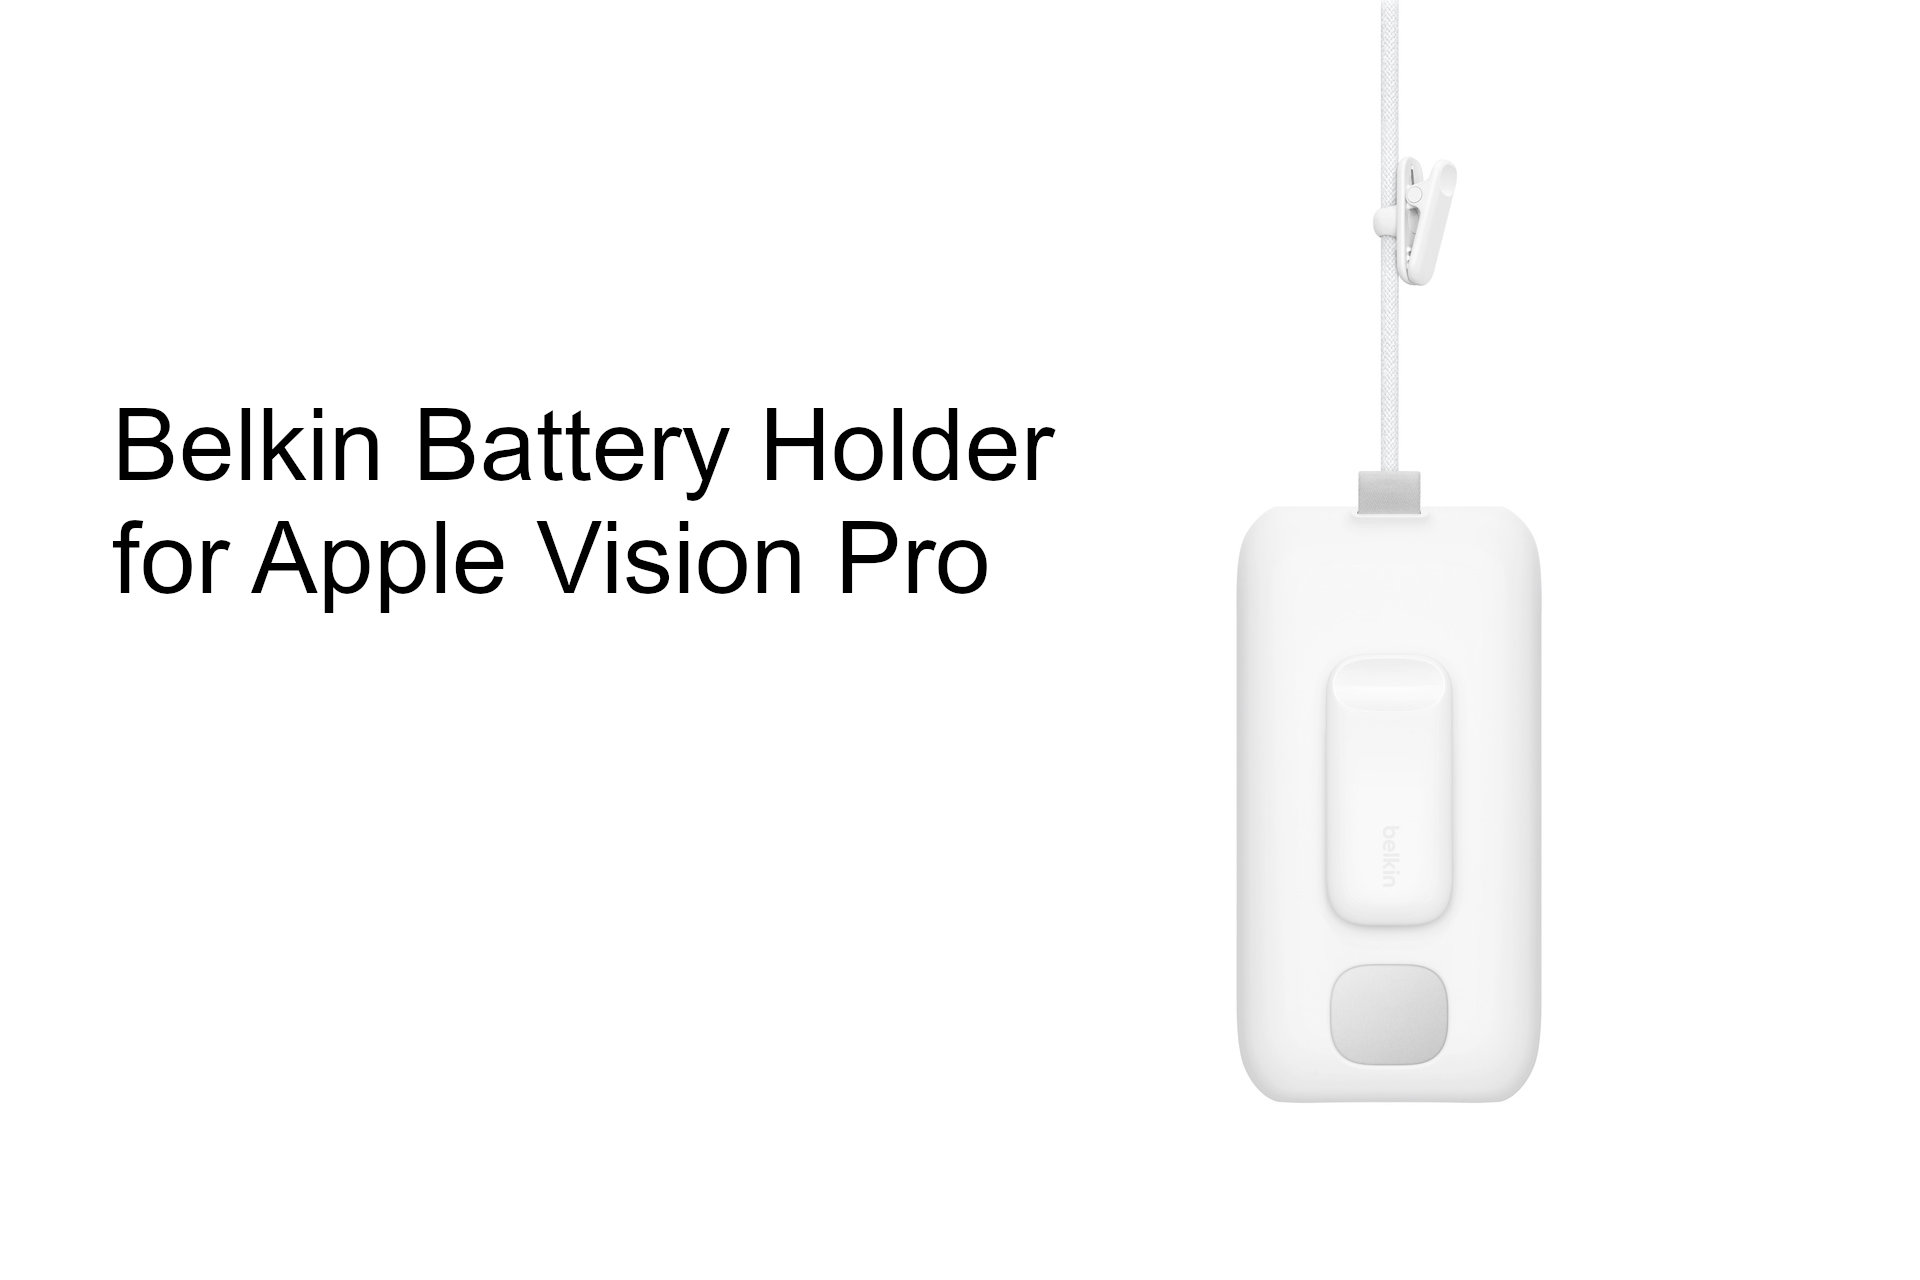 Suporte de bateria da Belkin para Apple Vision Pro.